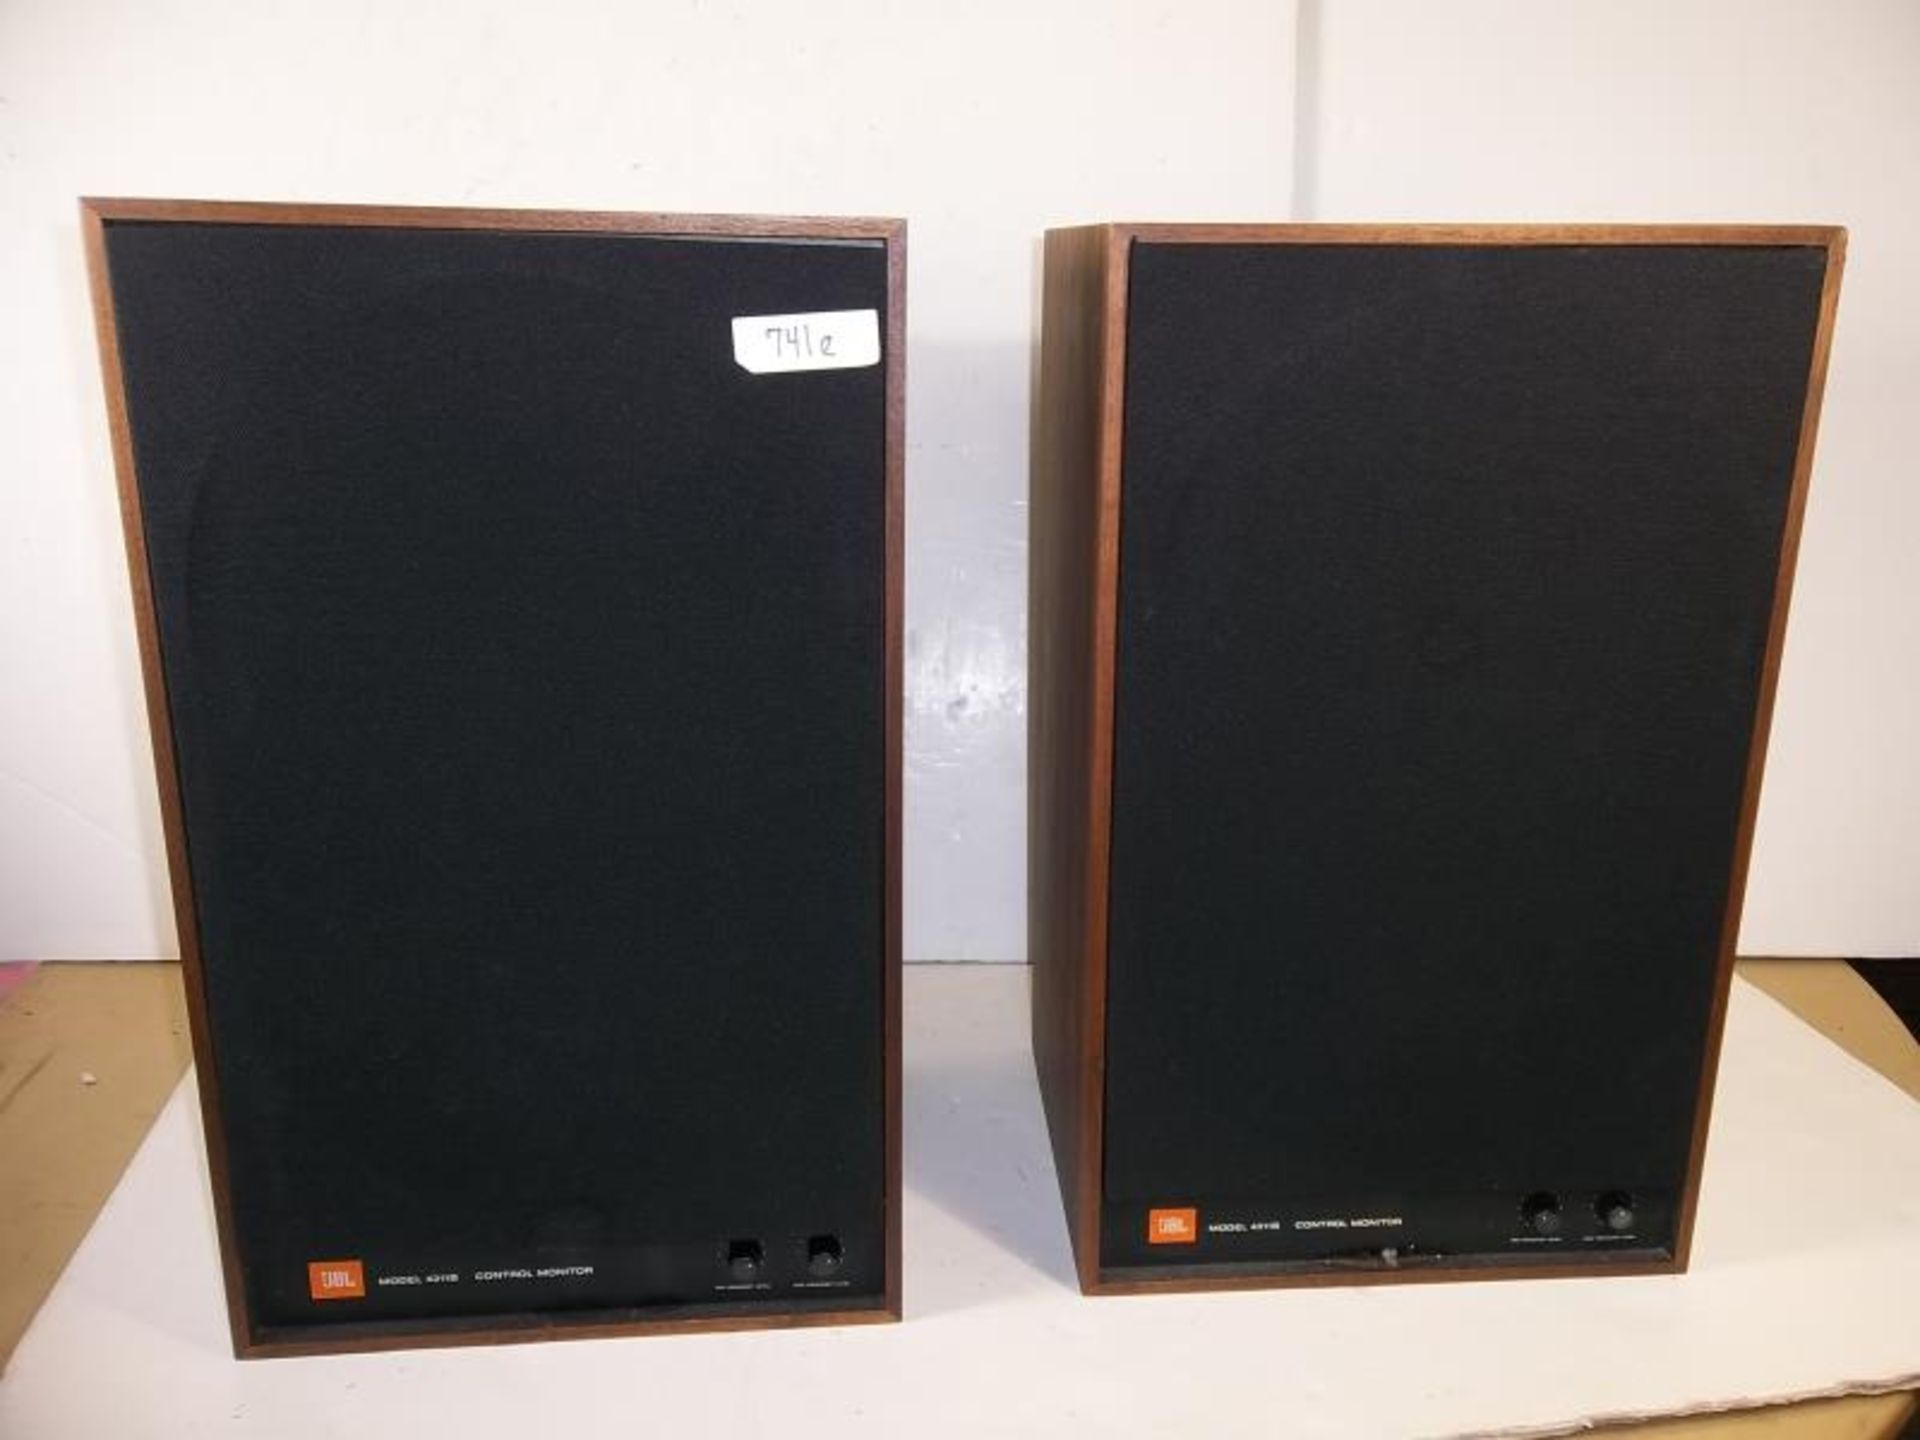 2 JBL Speaker Cabinets Only, Model 4311B, control monitor, no insides